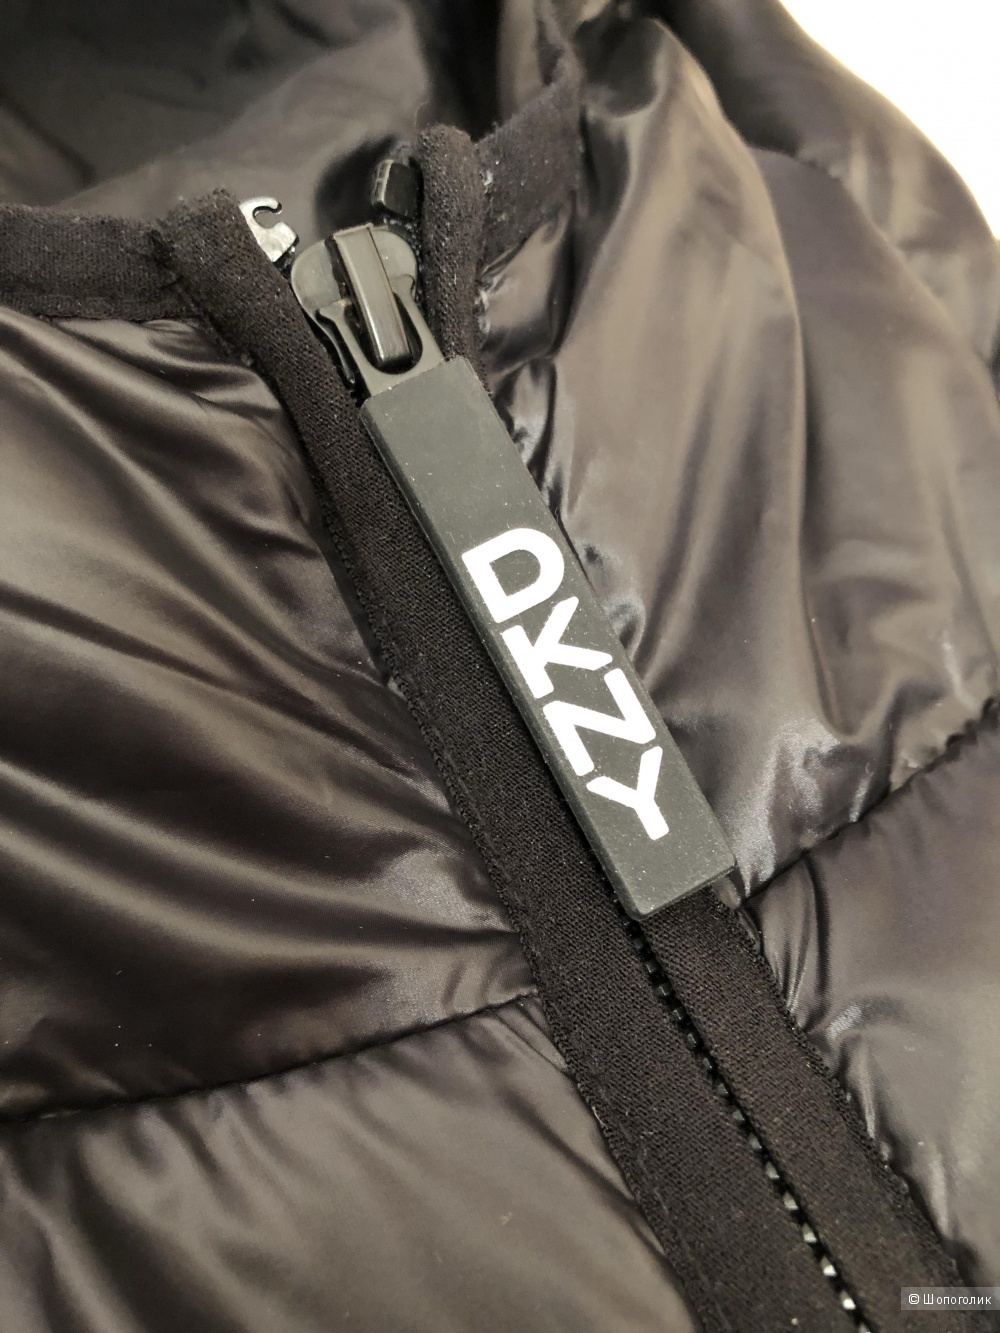 Мужской пуховик DKNY размер XL